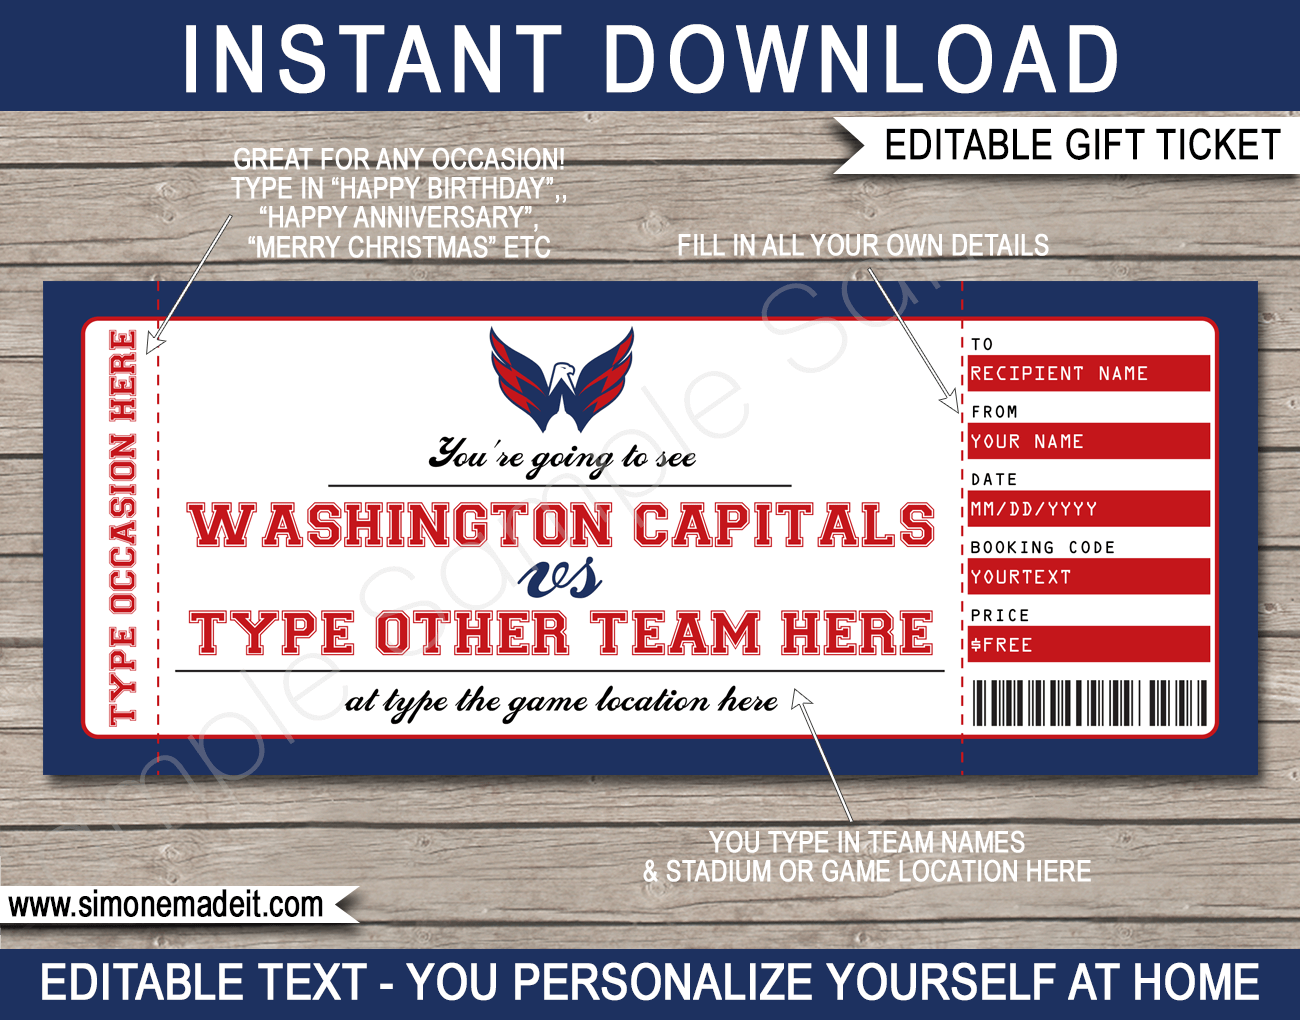 NHL - Washington Capitals: 2 Upper Level Tickets, eVoucher